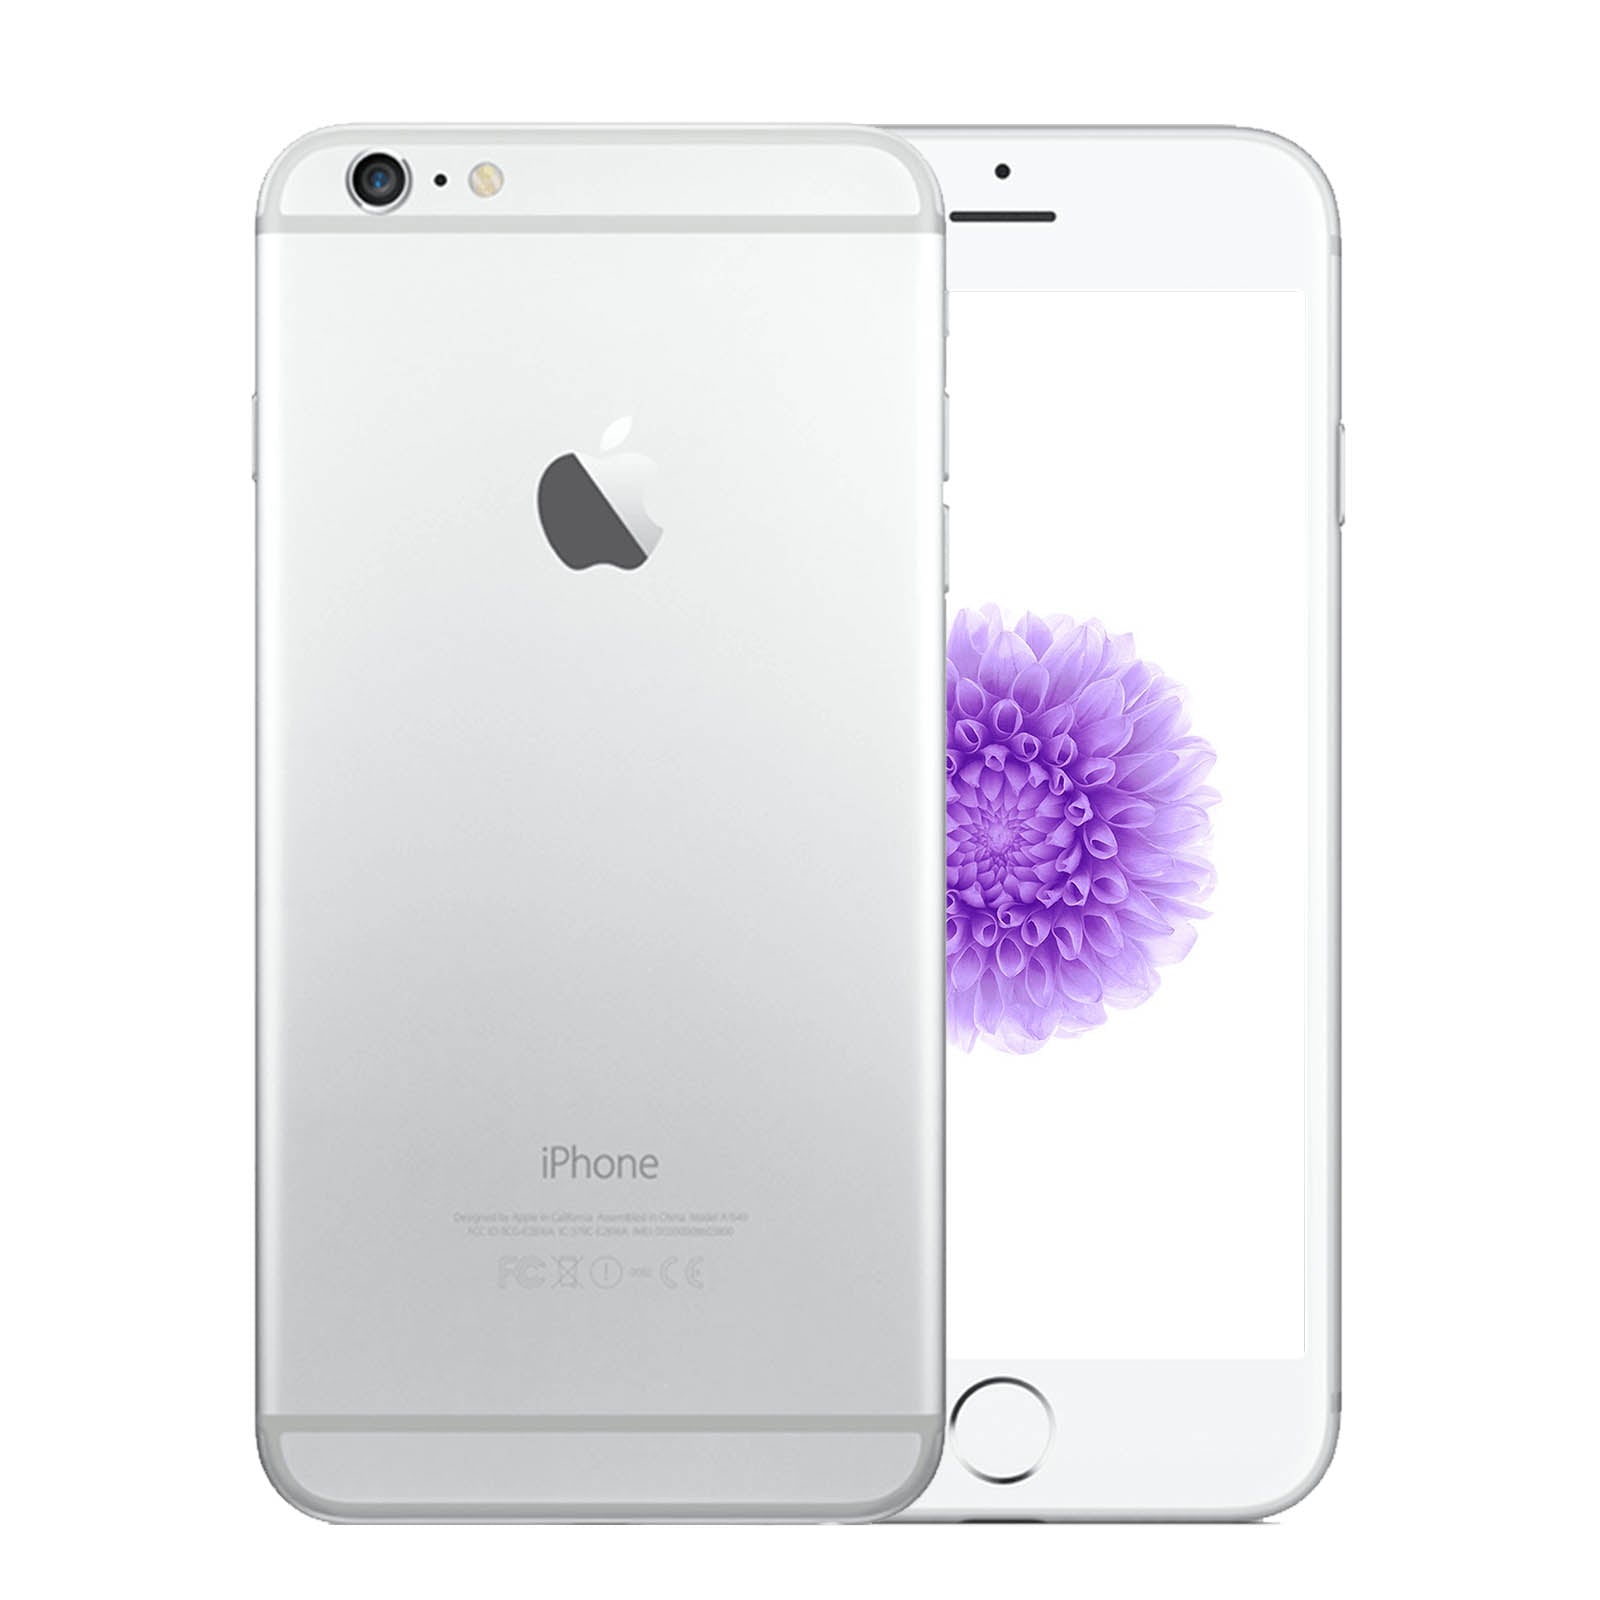 Apple iPhone 6 128GB Silver Very Good - Unlocked